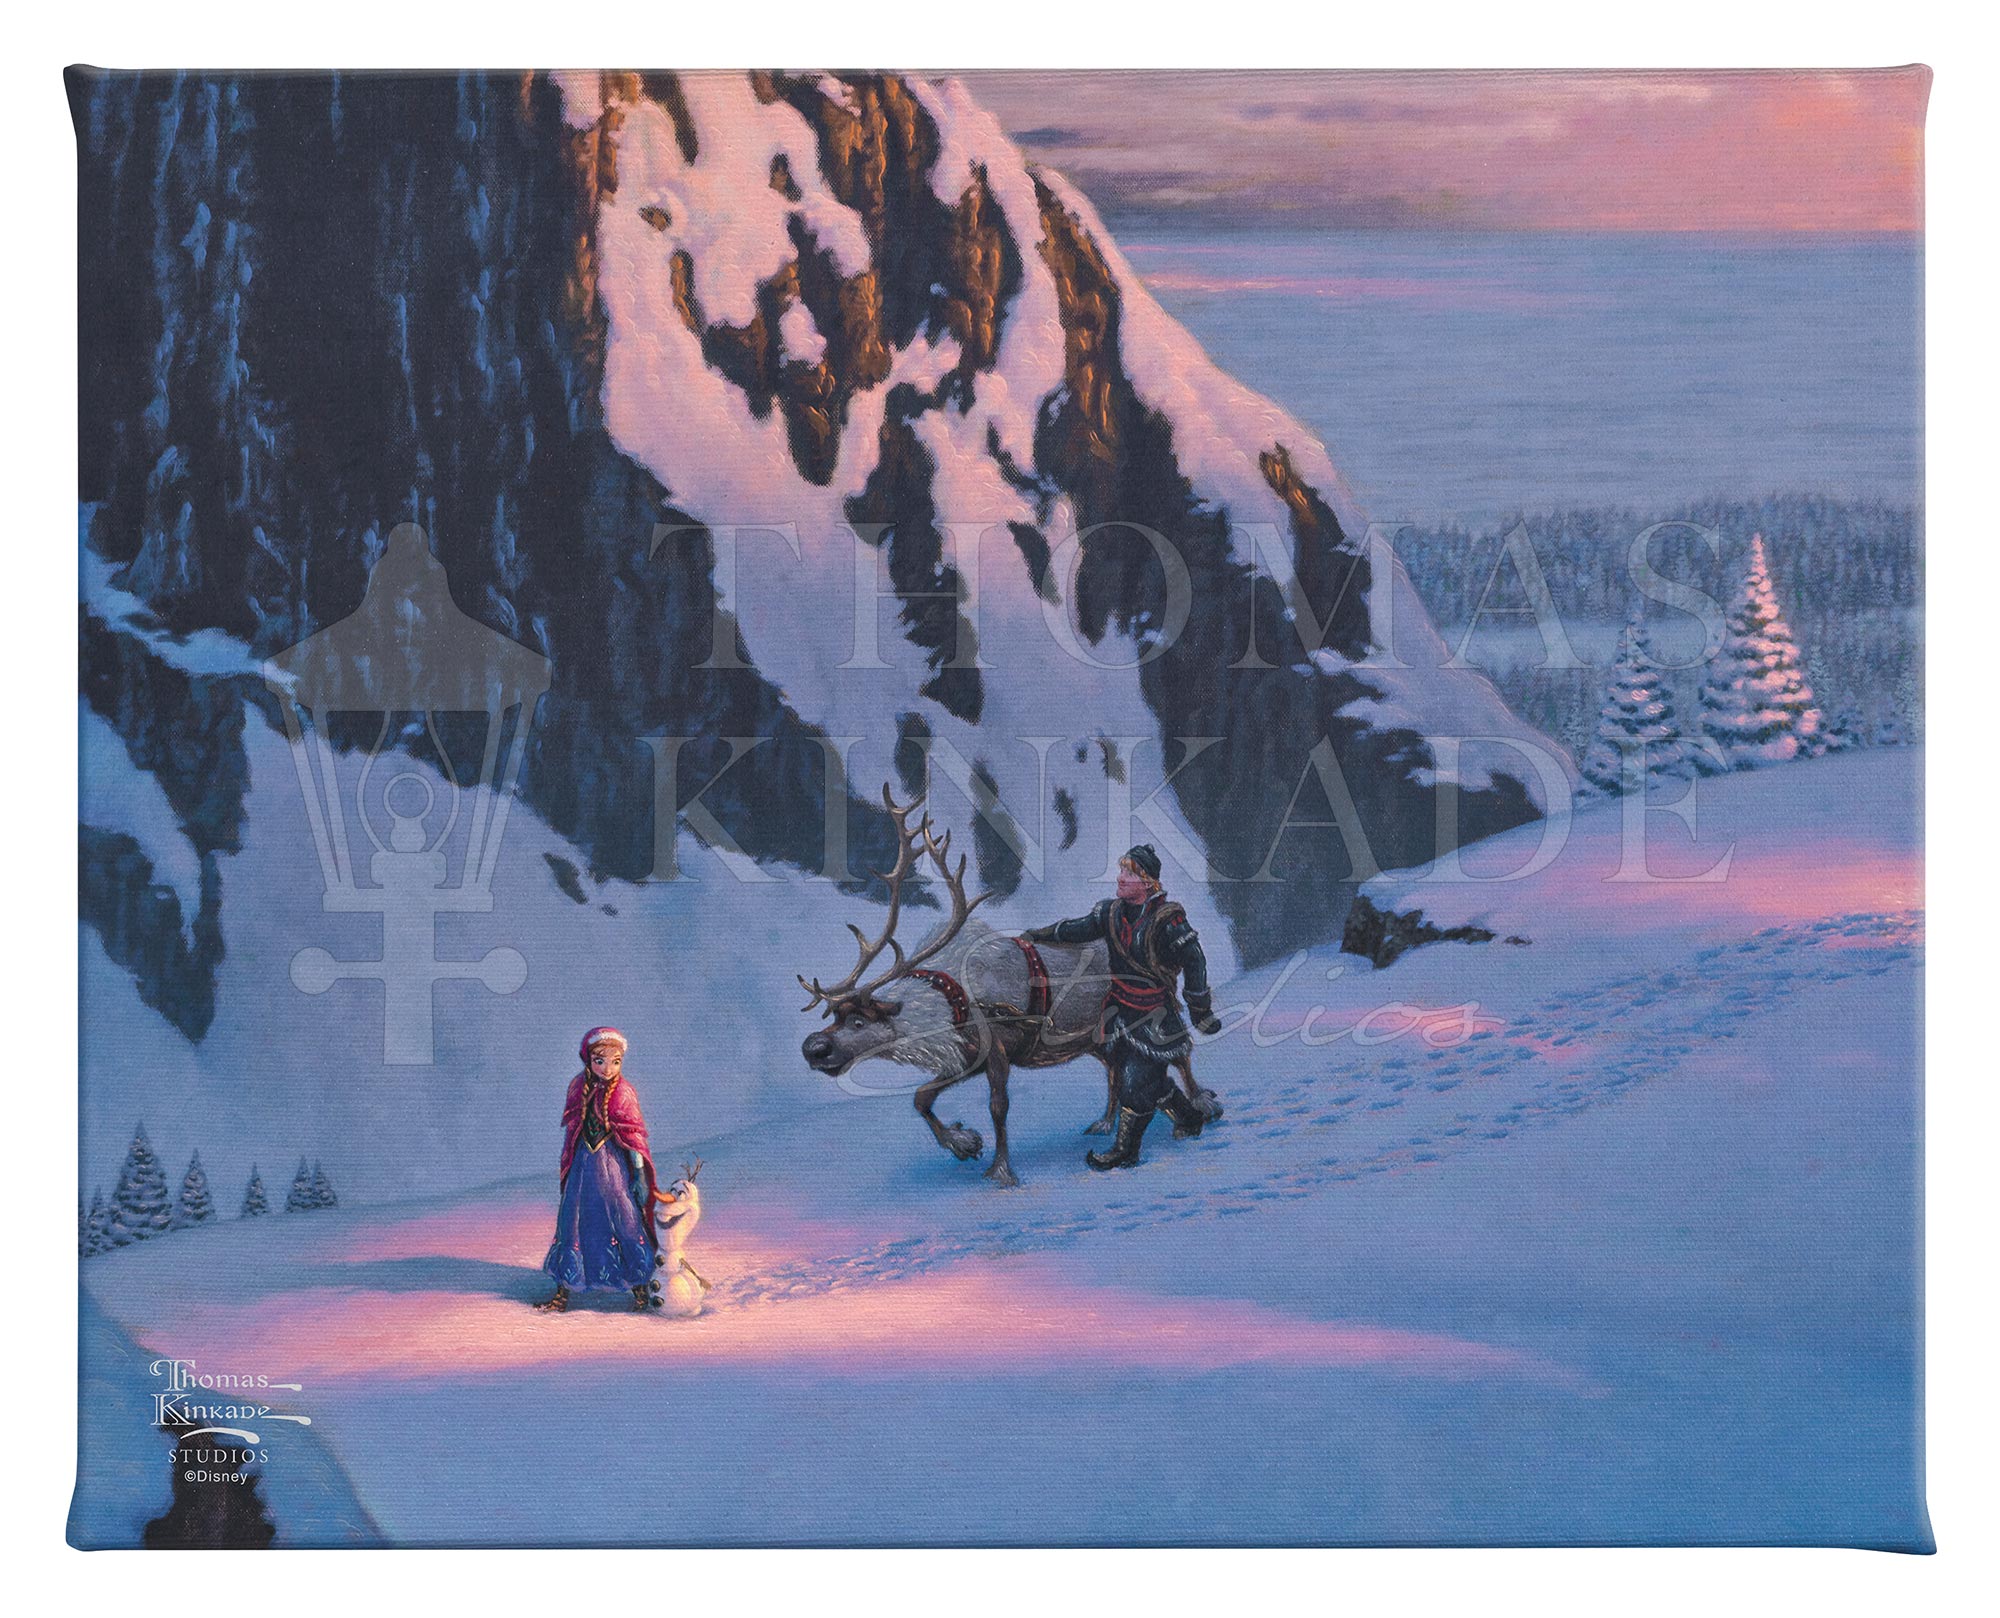 Disney FROZEN Wall Decal - Princess Elsa of Arendelle